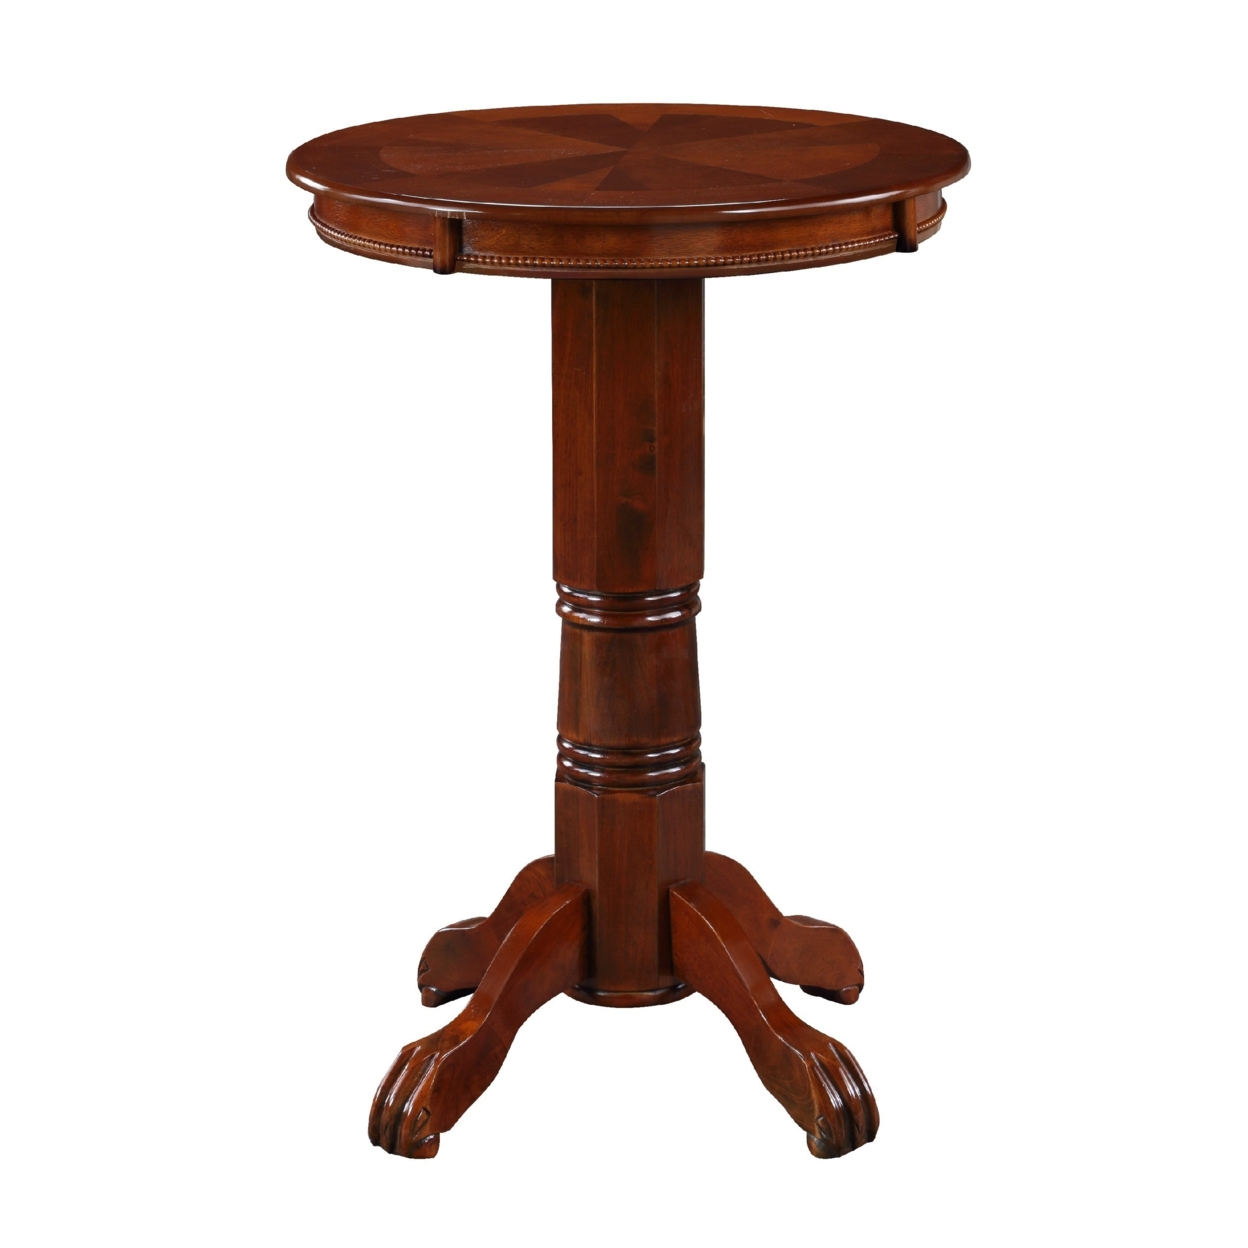 Ava 42 Inch Pub Bar Table, Wood, Round Sunburst Design, Carved Pedestal, Espresso Brown